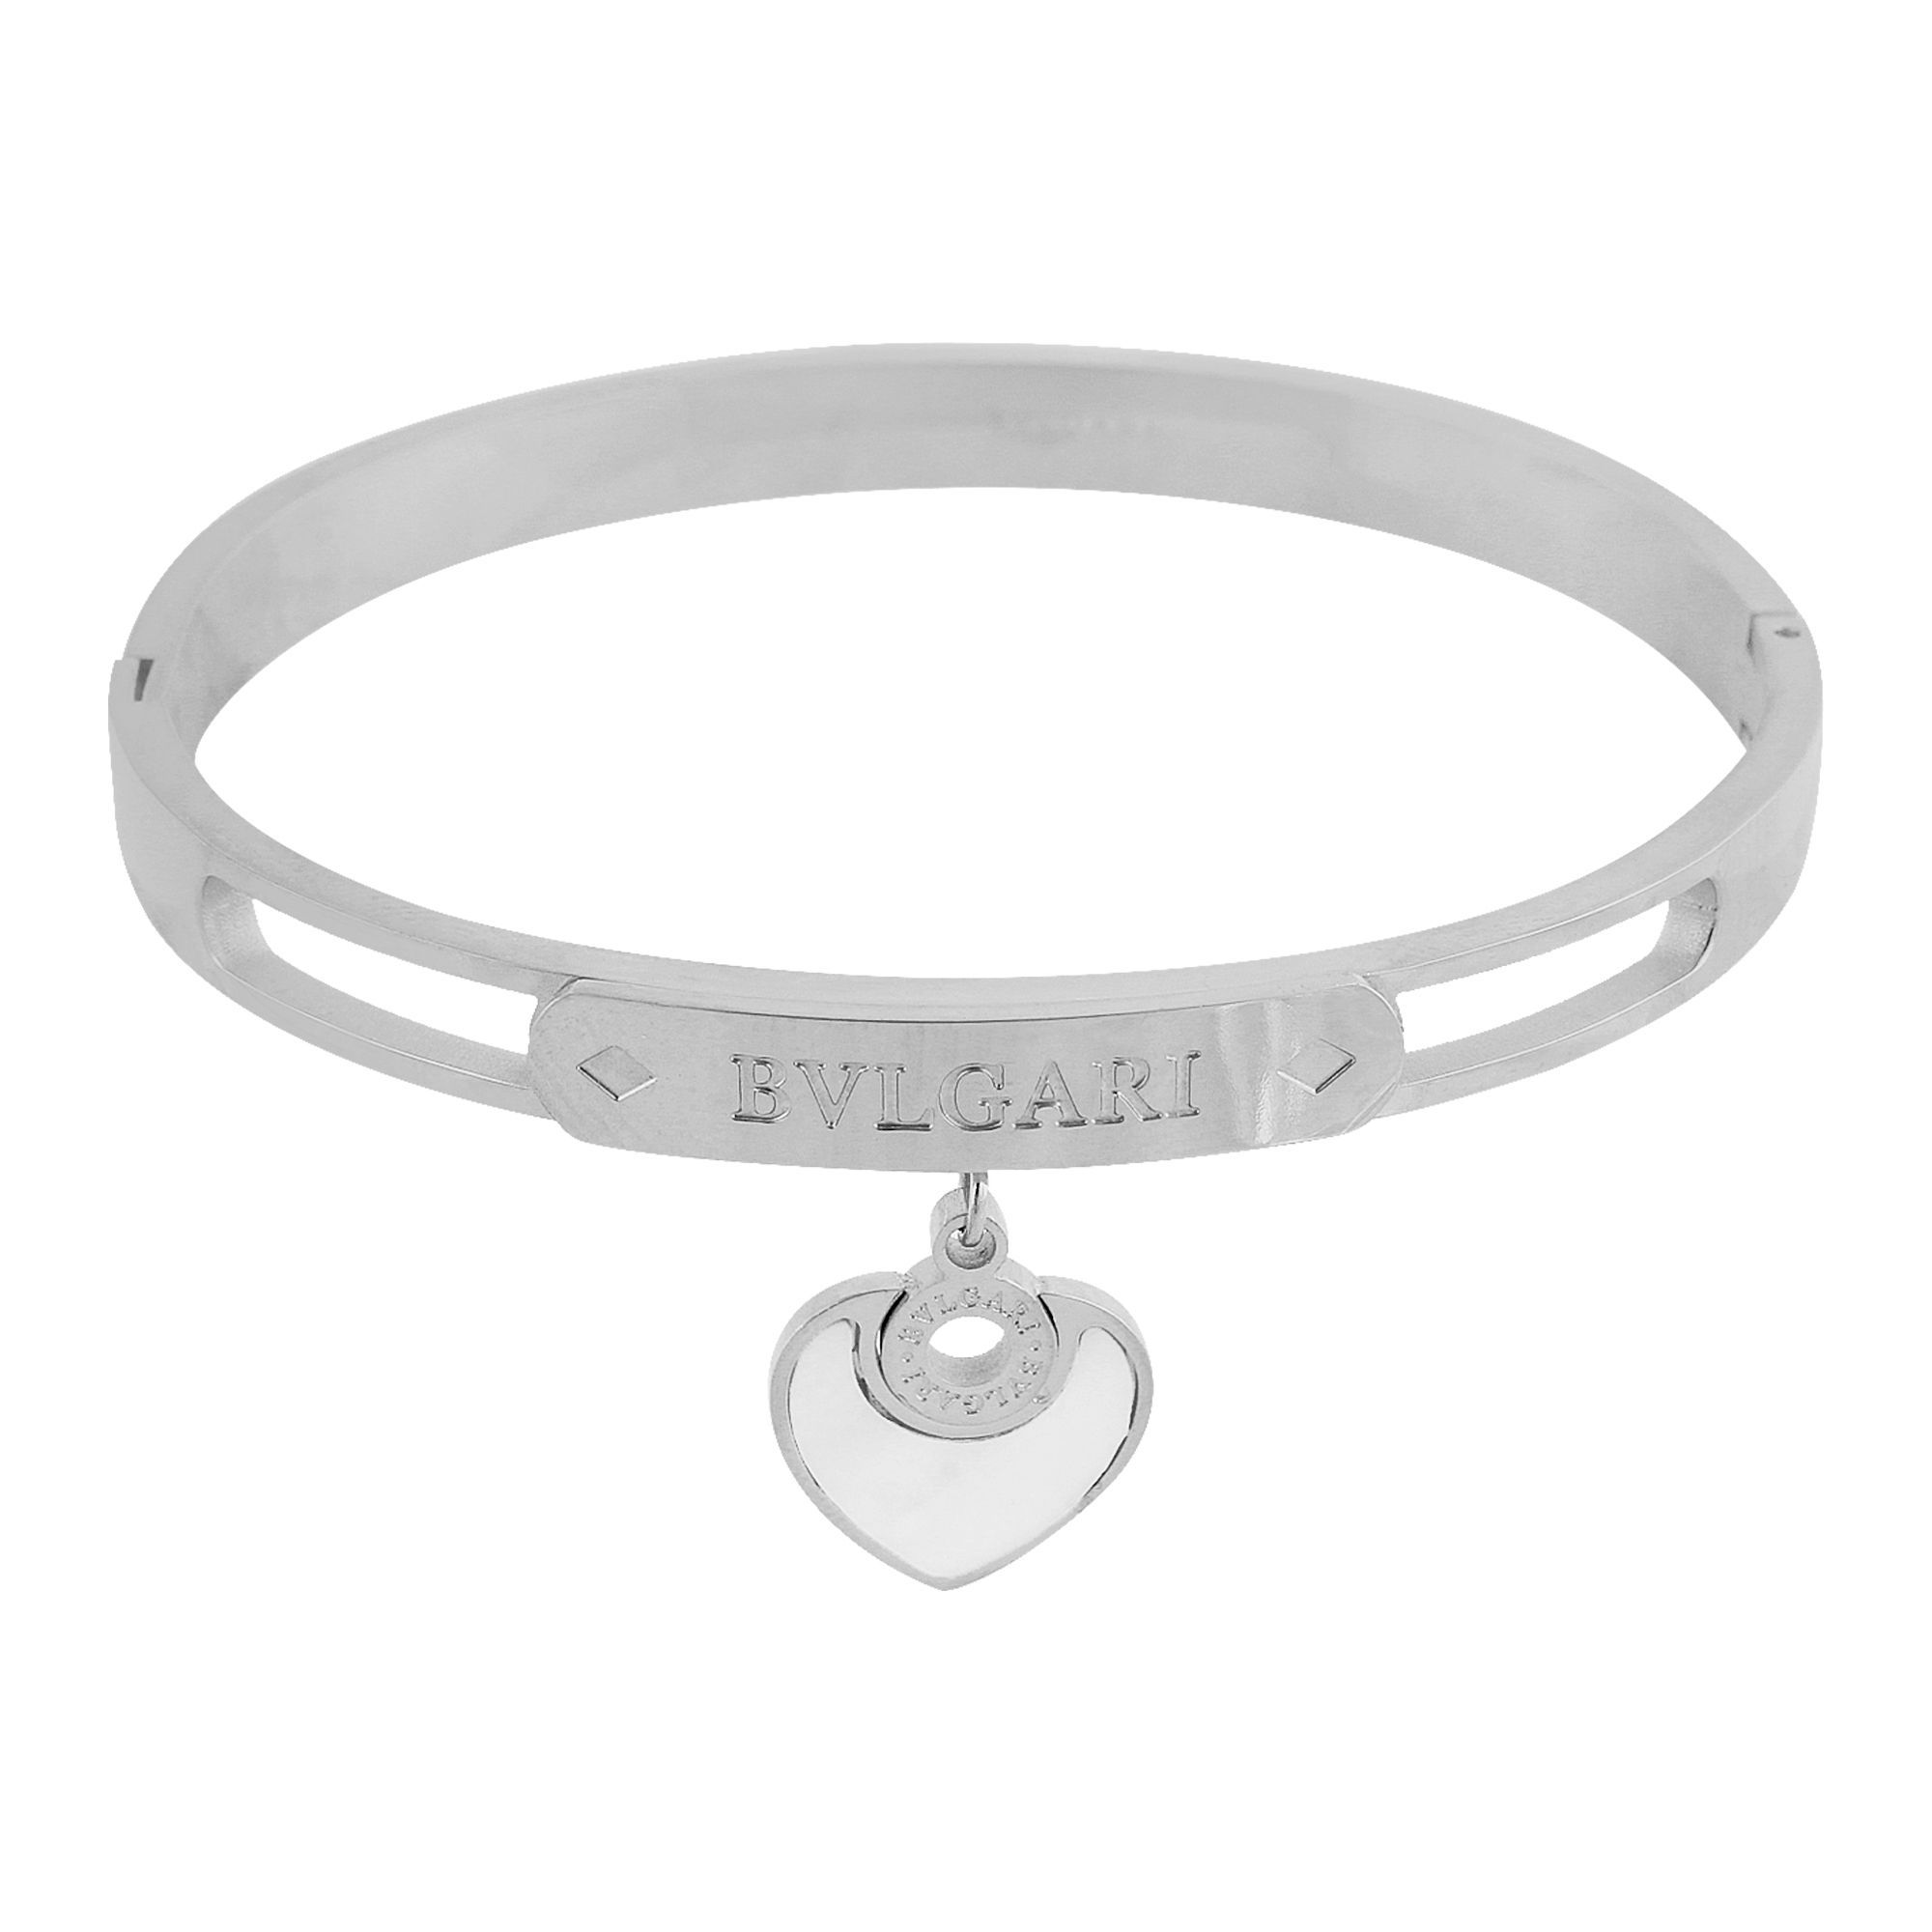 Buy Bvlgari Girls Bracelet, Silver, NS-0176 Online at Special Price in ...